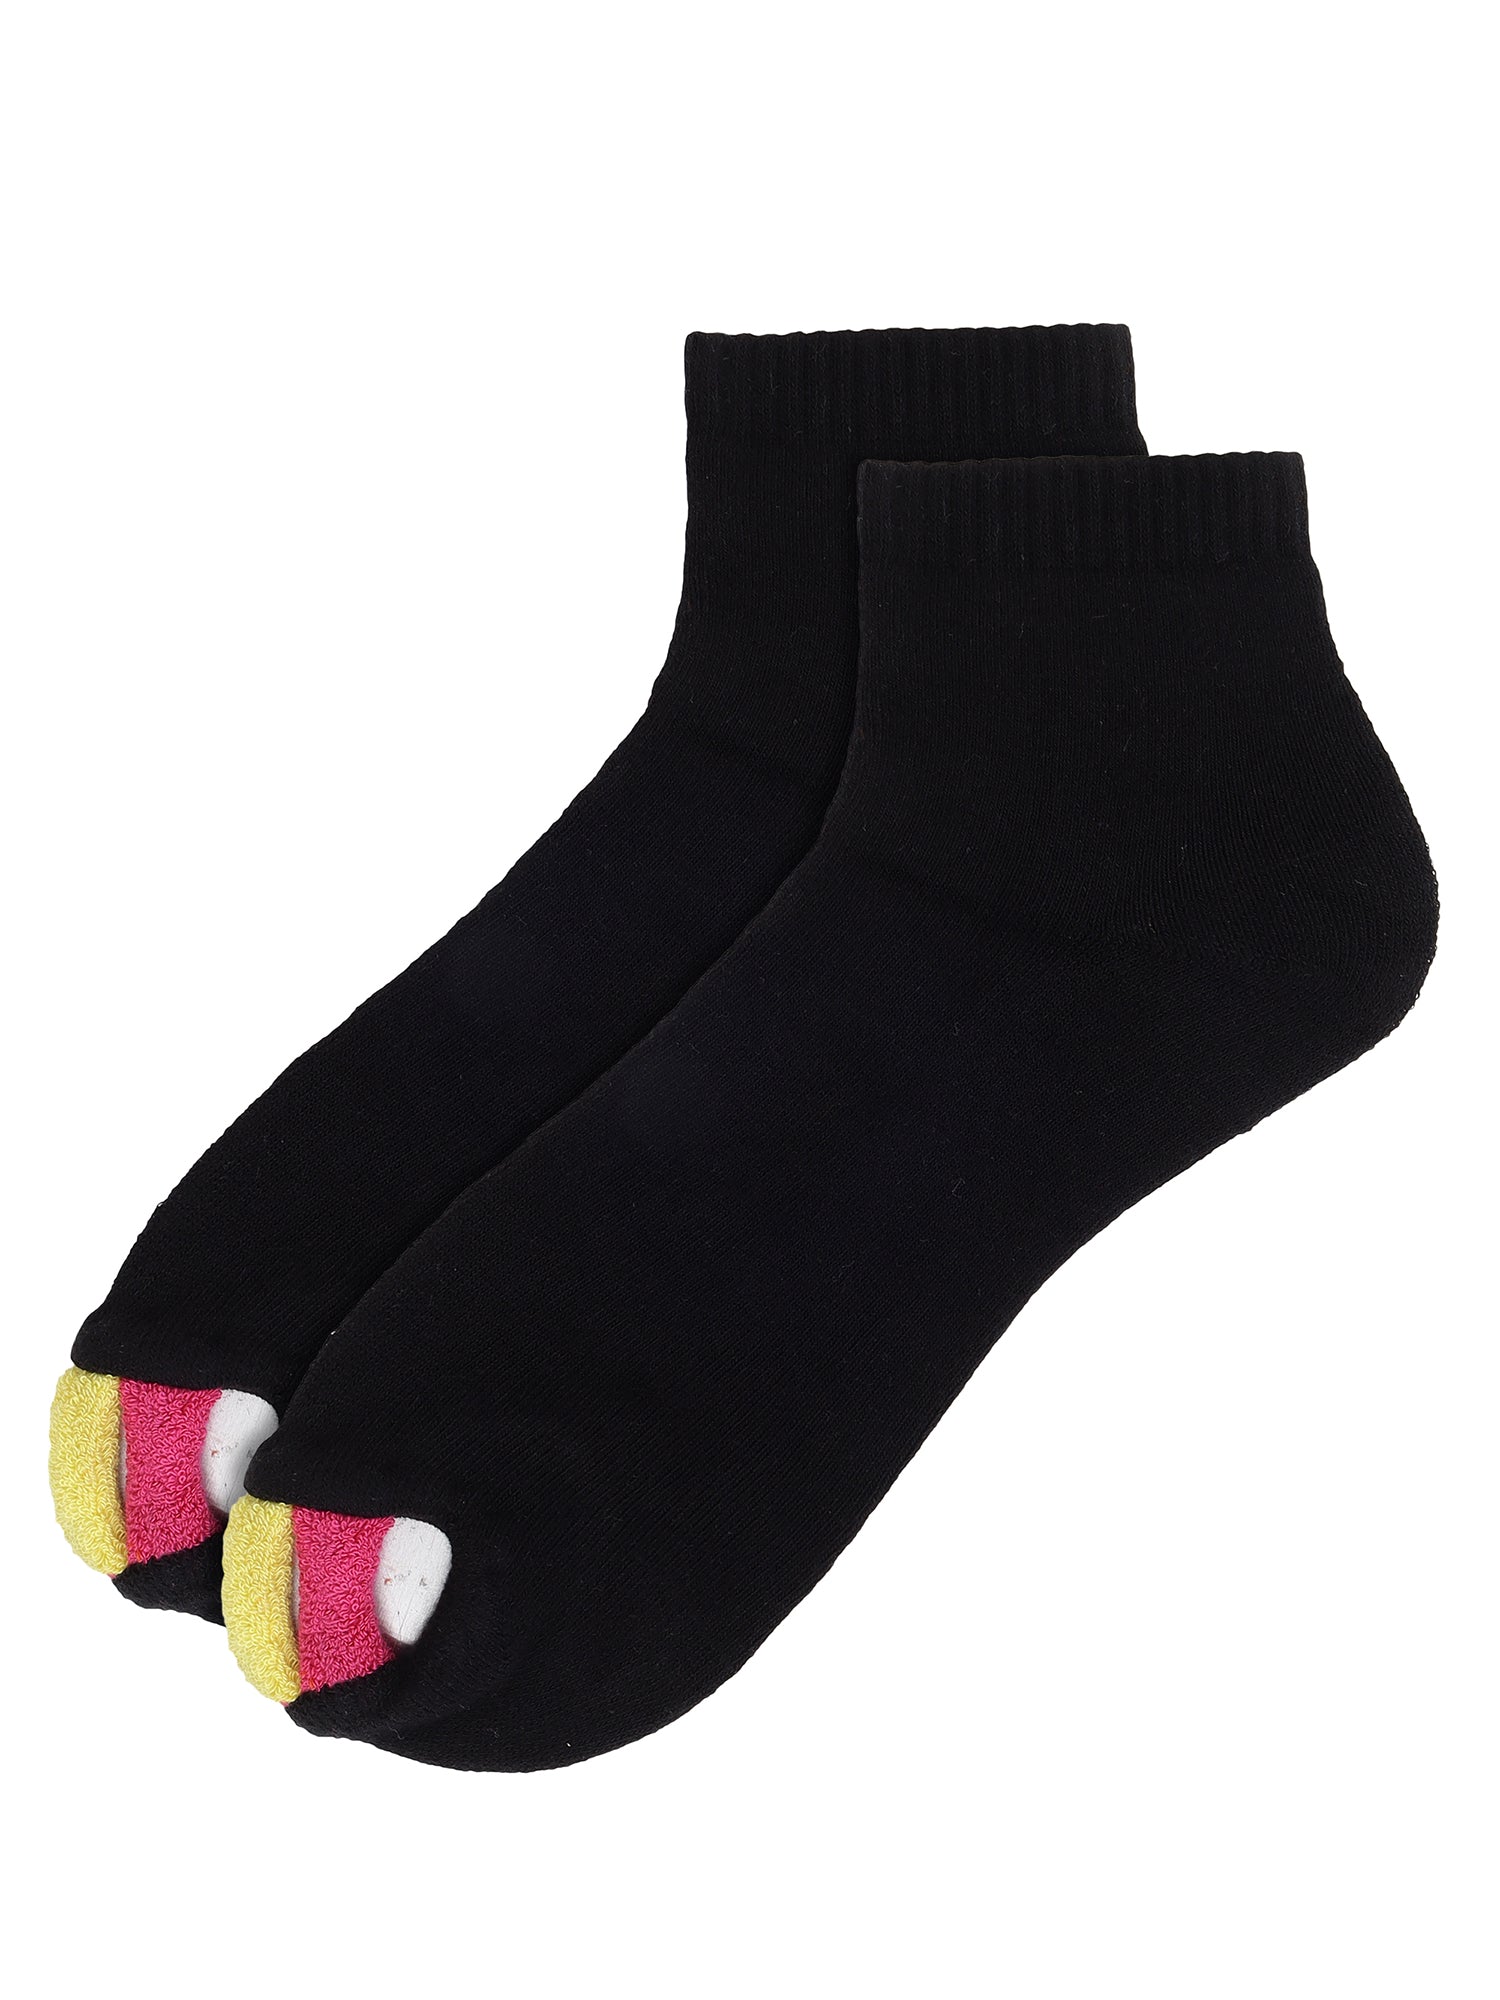 Foot Alignment Sock Black